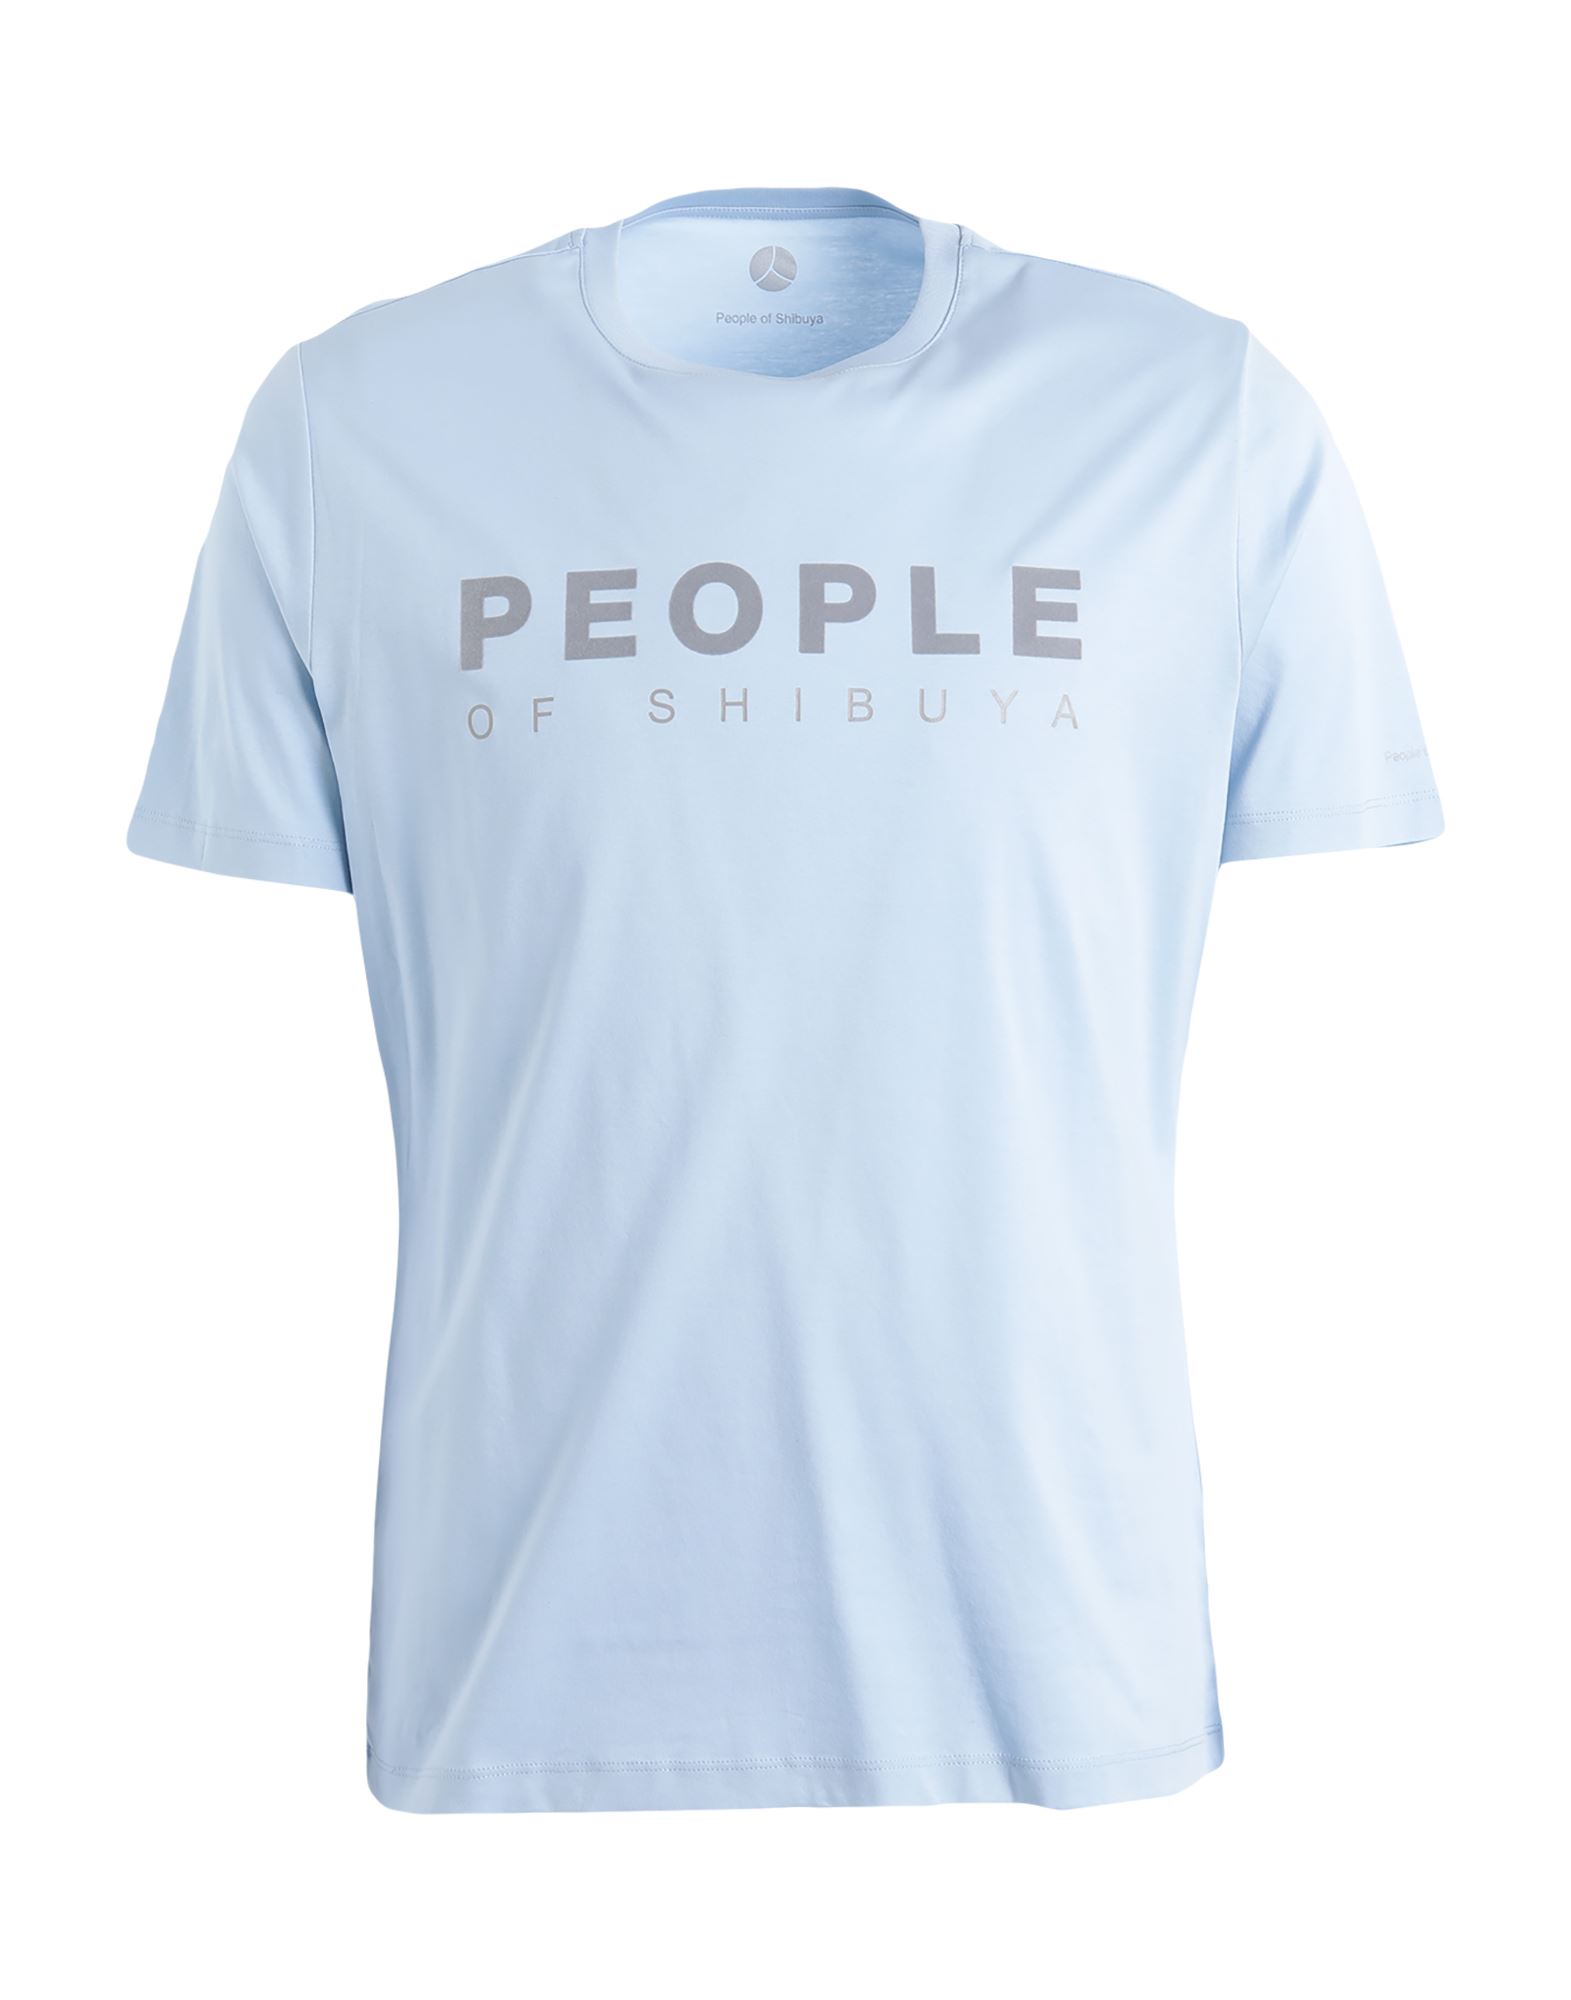 PEOPLE OF SHIBUYA T-shirts Herren Hellblau von PEOPLE OF SHIBUYA